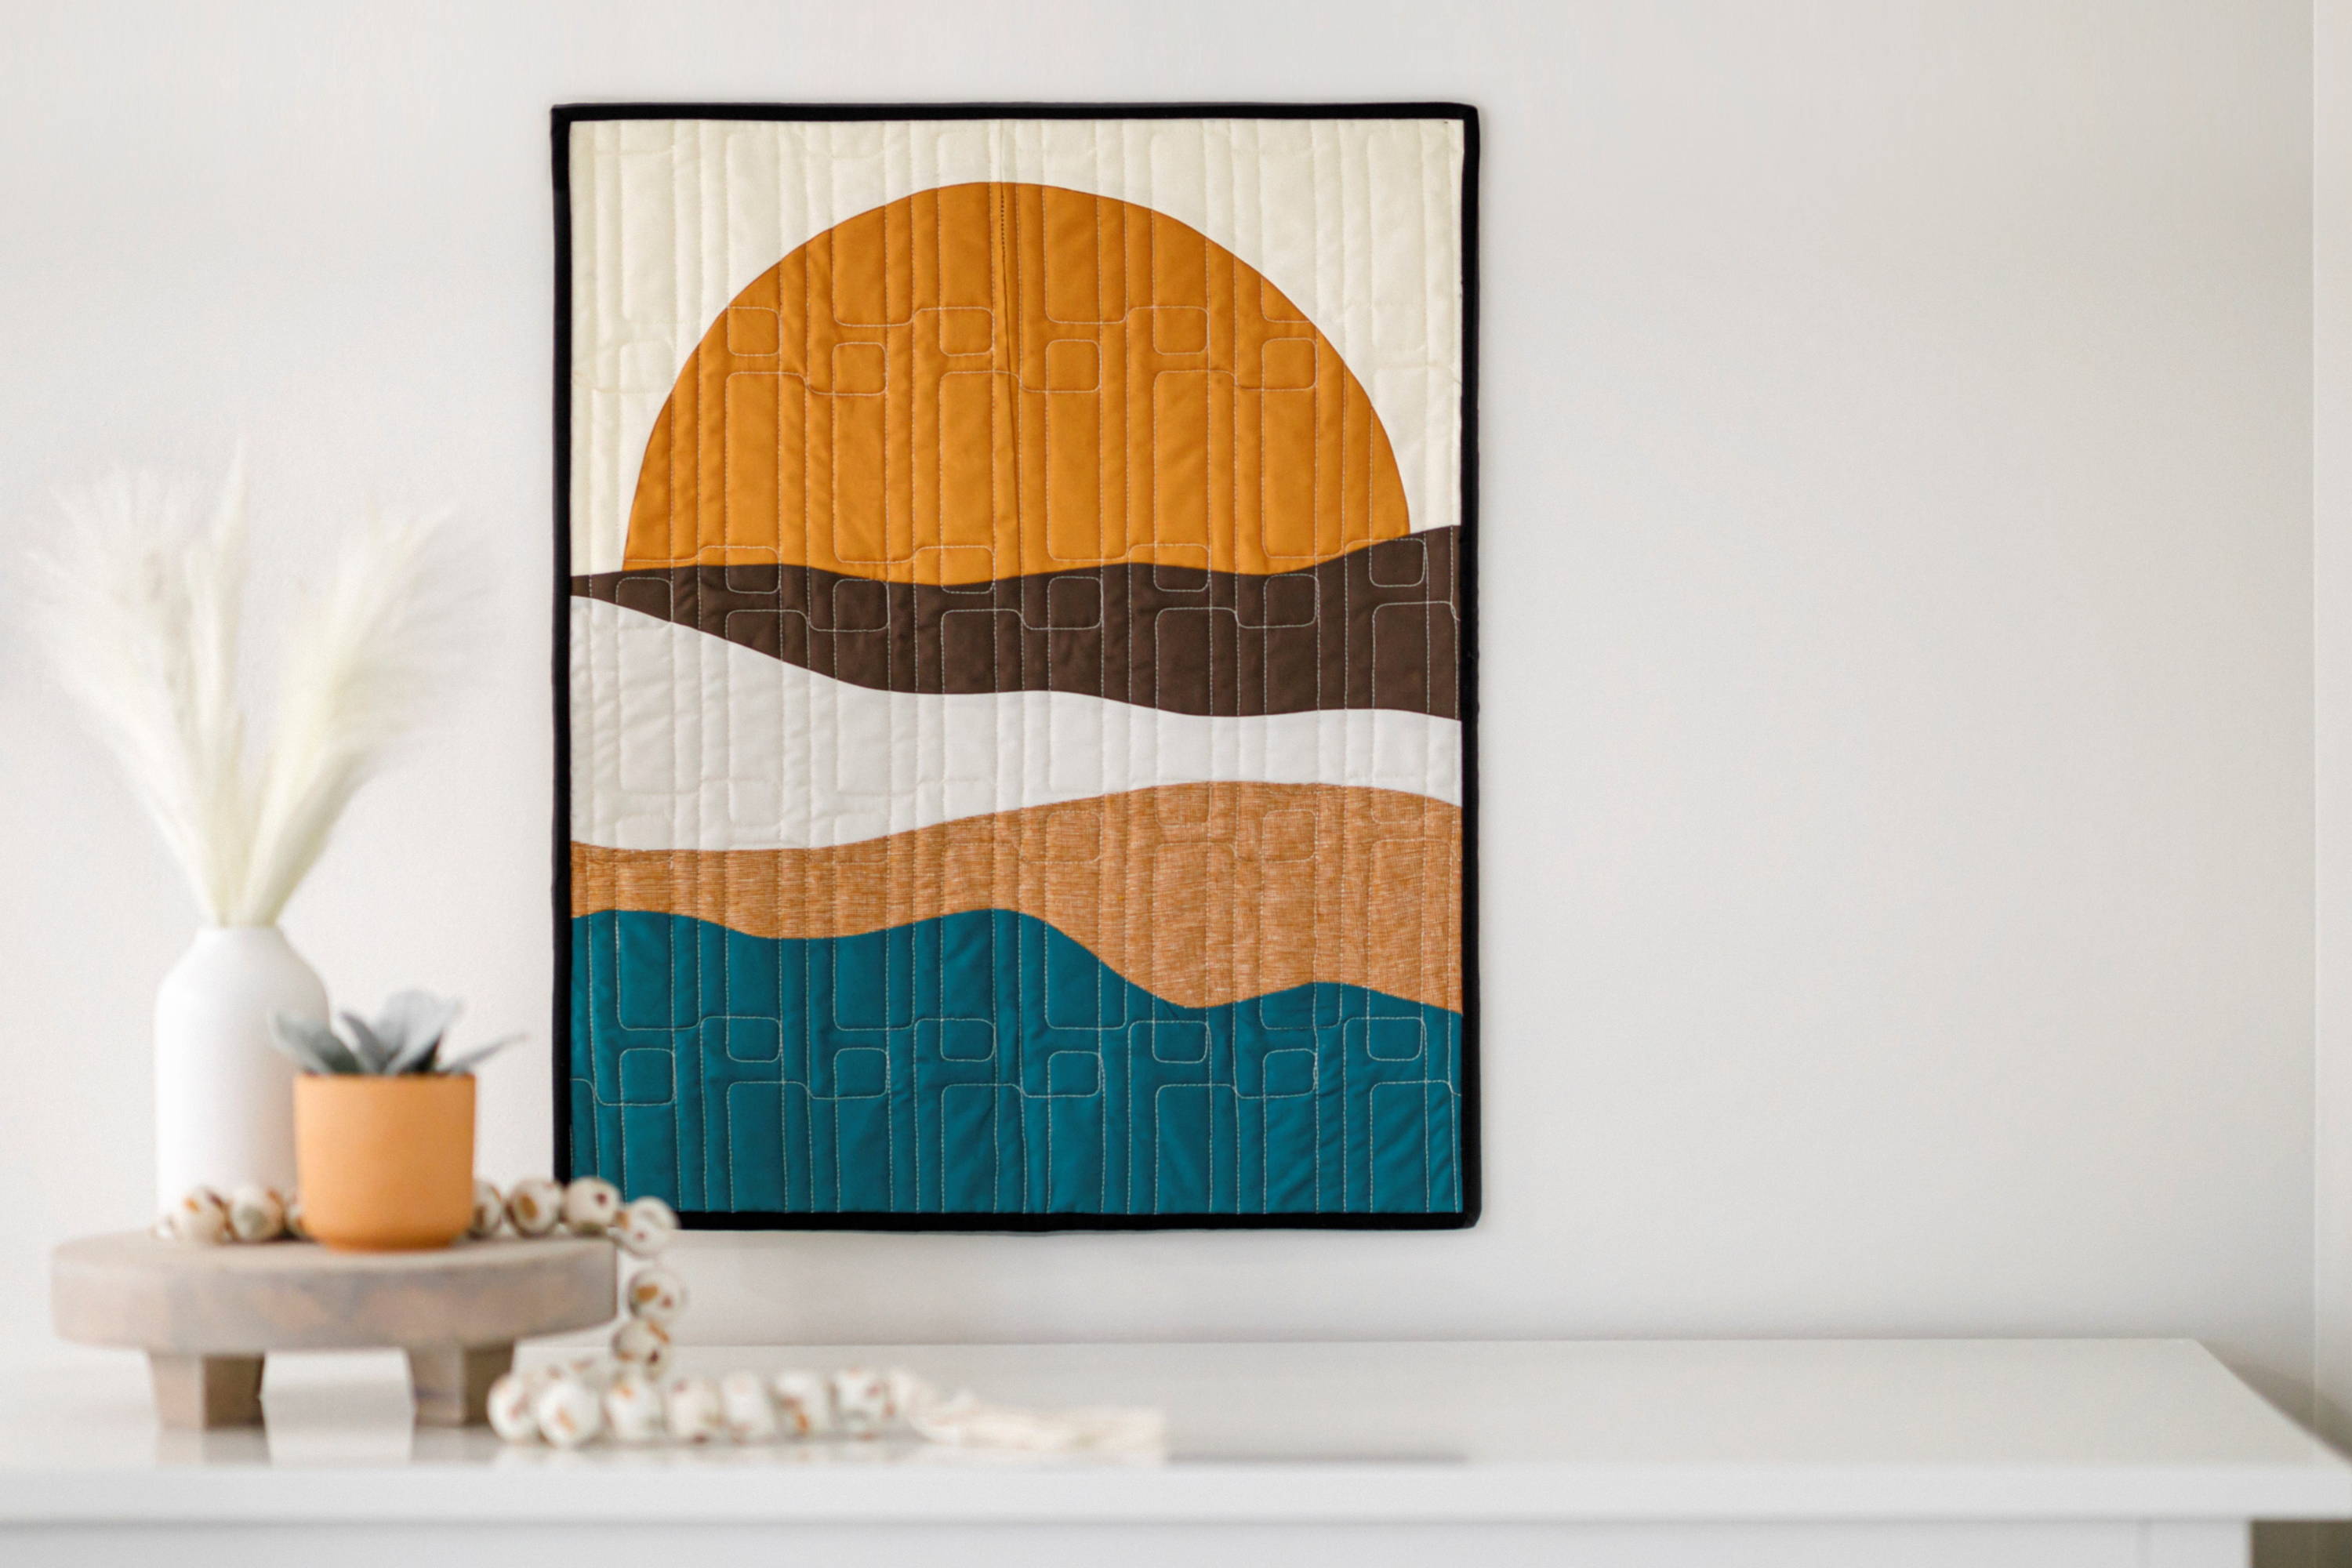 freestyle sunset wall hanging pattern using fat quarter bundles